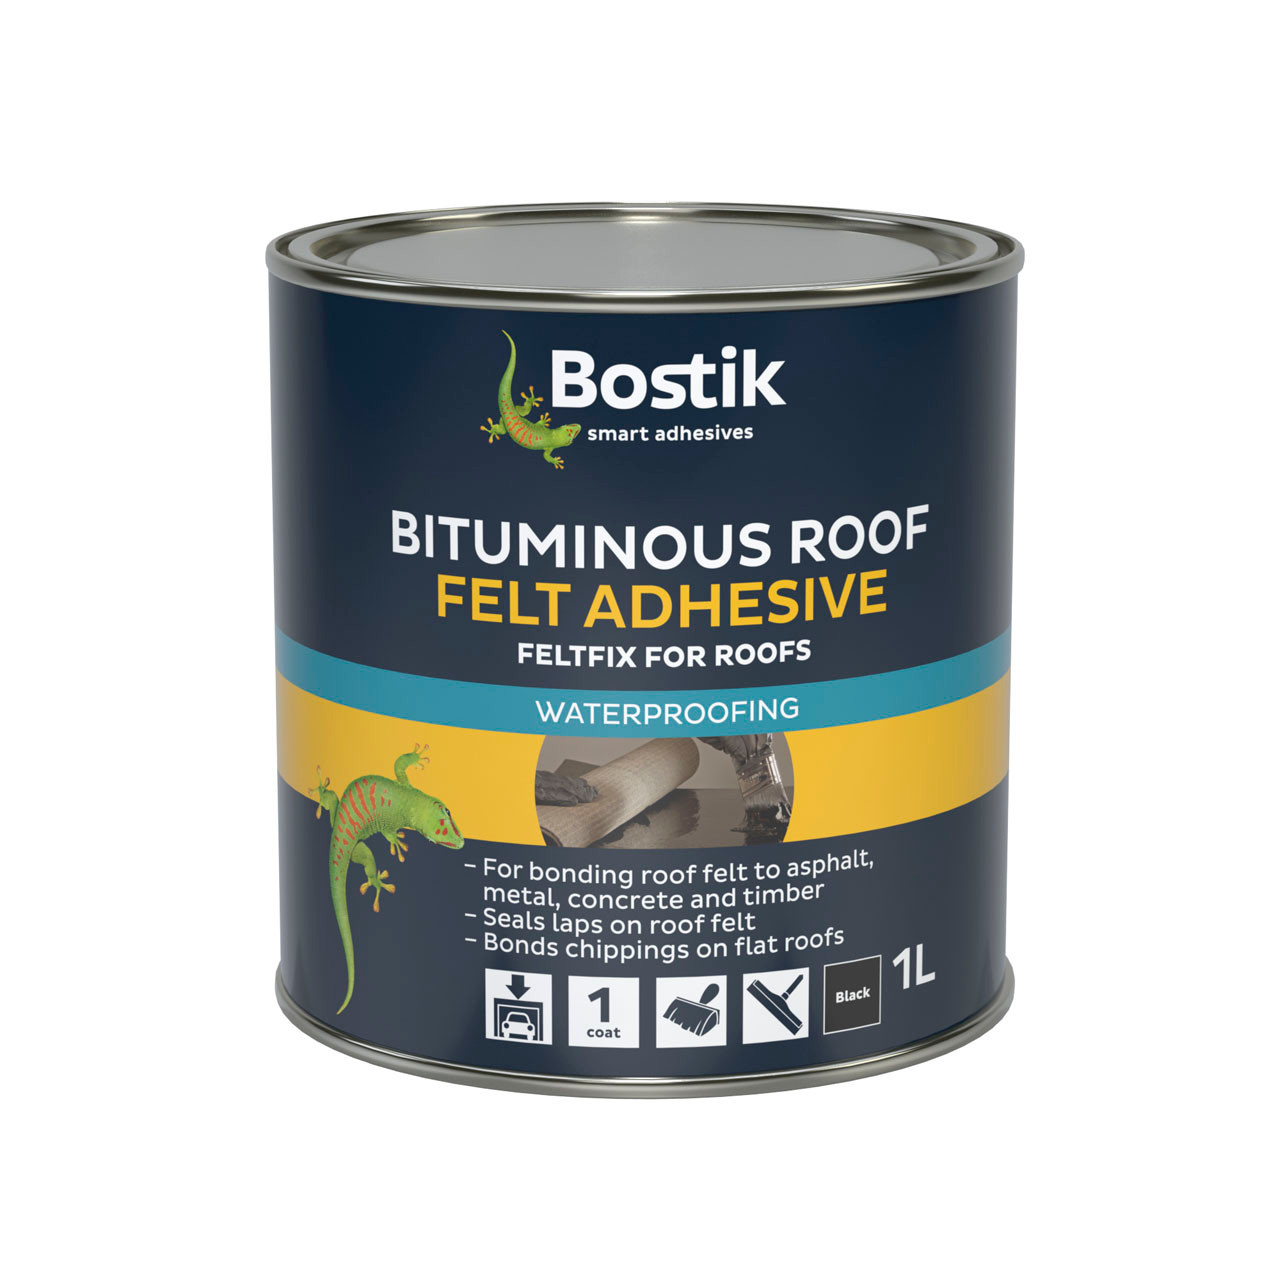 Photograph of Bostik Bituminous Felt Adhesive for Roofs 1L - Black